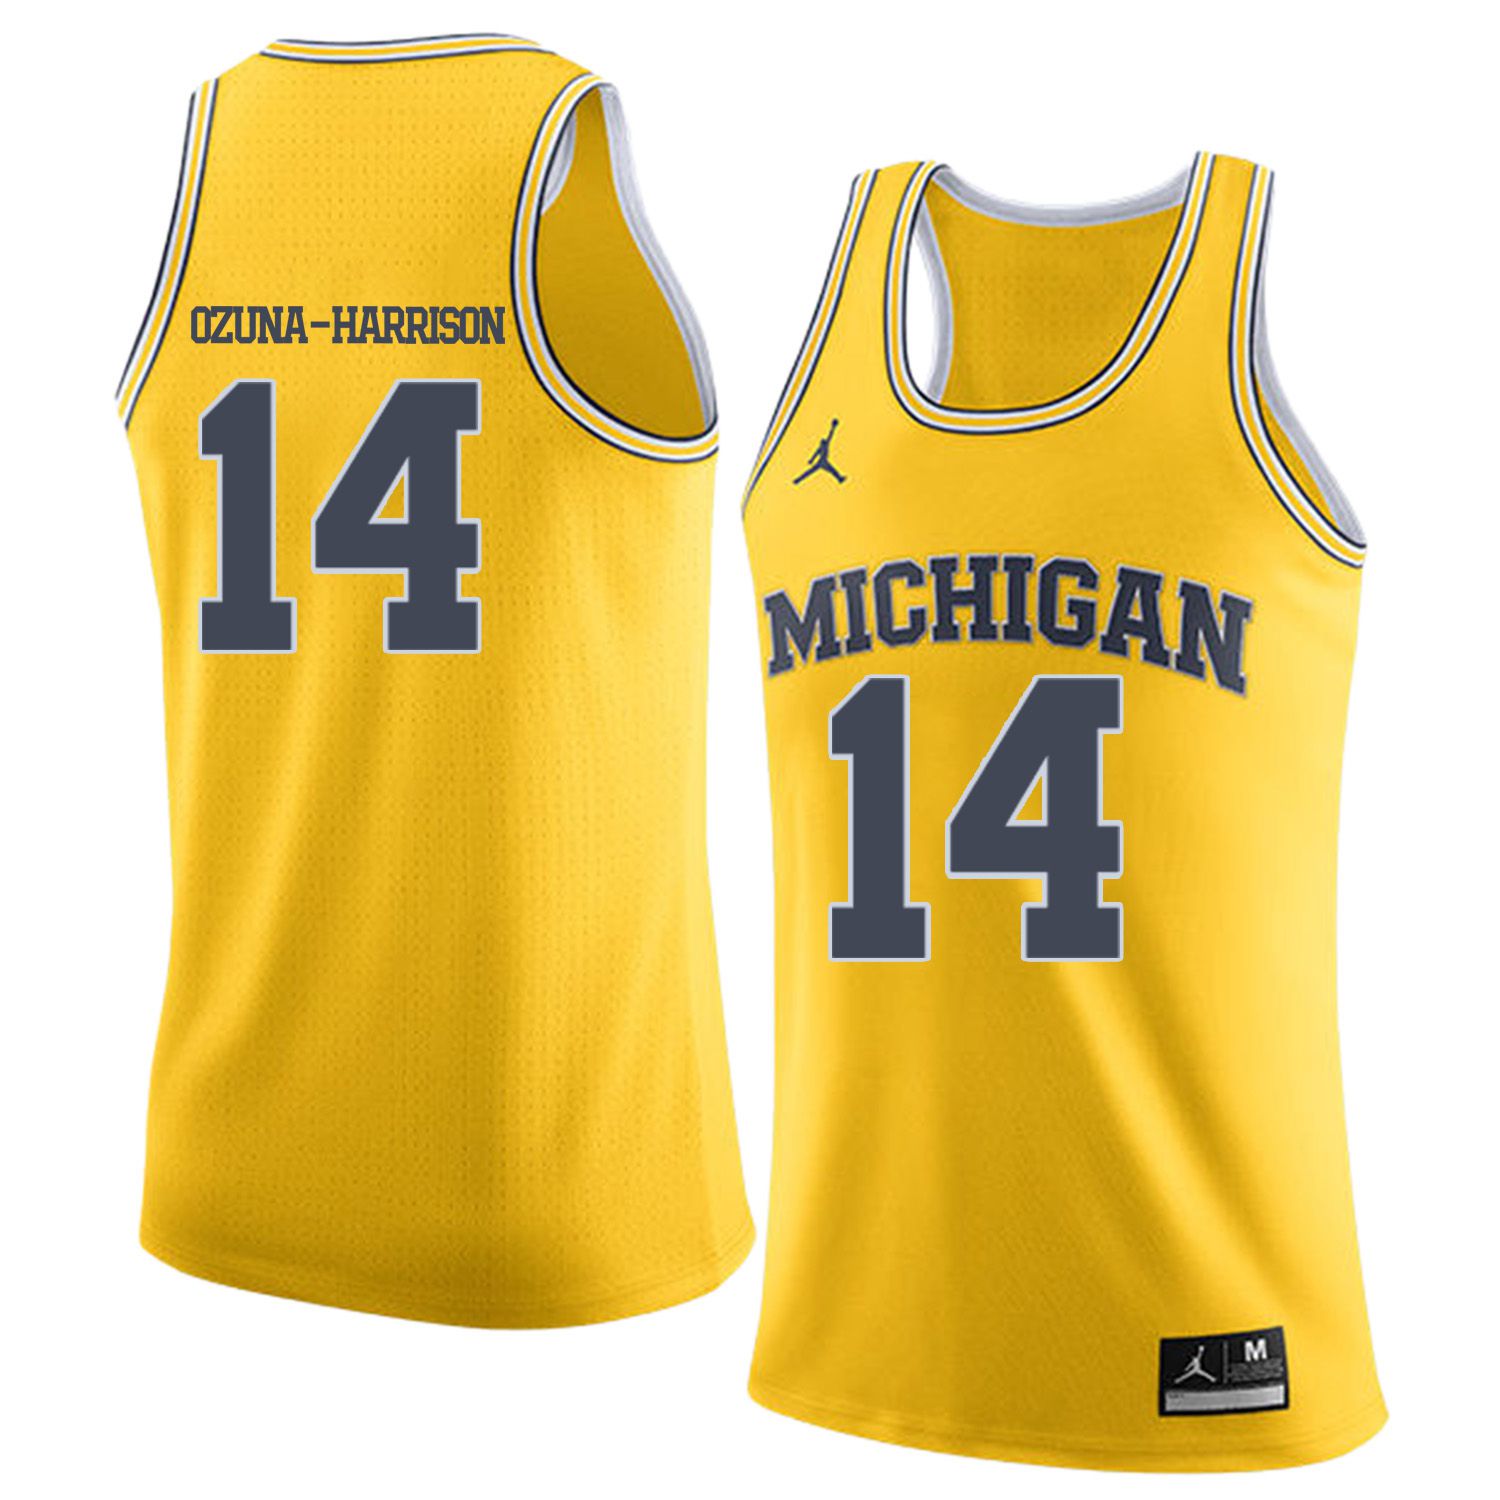 Men Jordan University of Michigan Basketball Yellow 14 Ozuna-Harrison Customized NCAA Jerseys